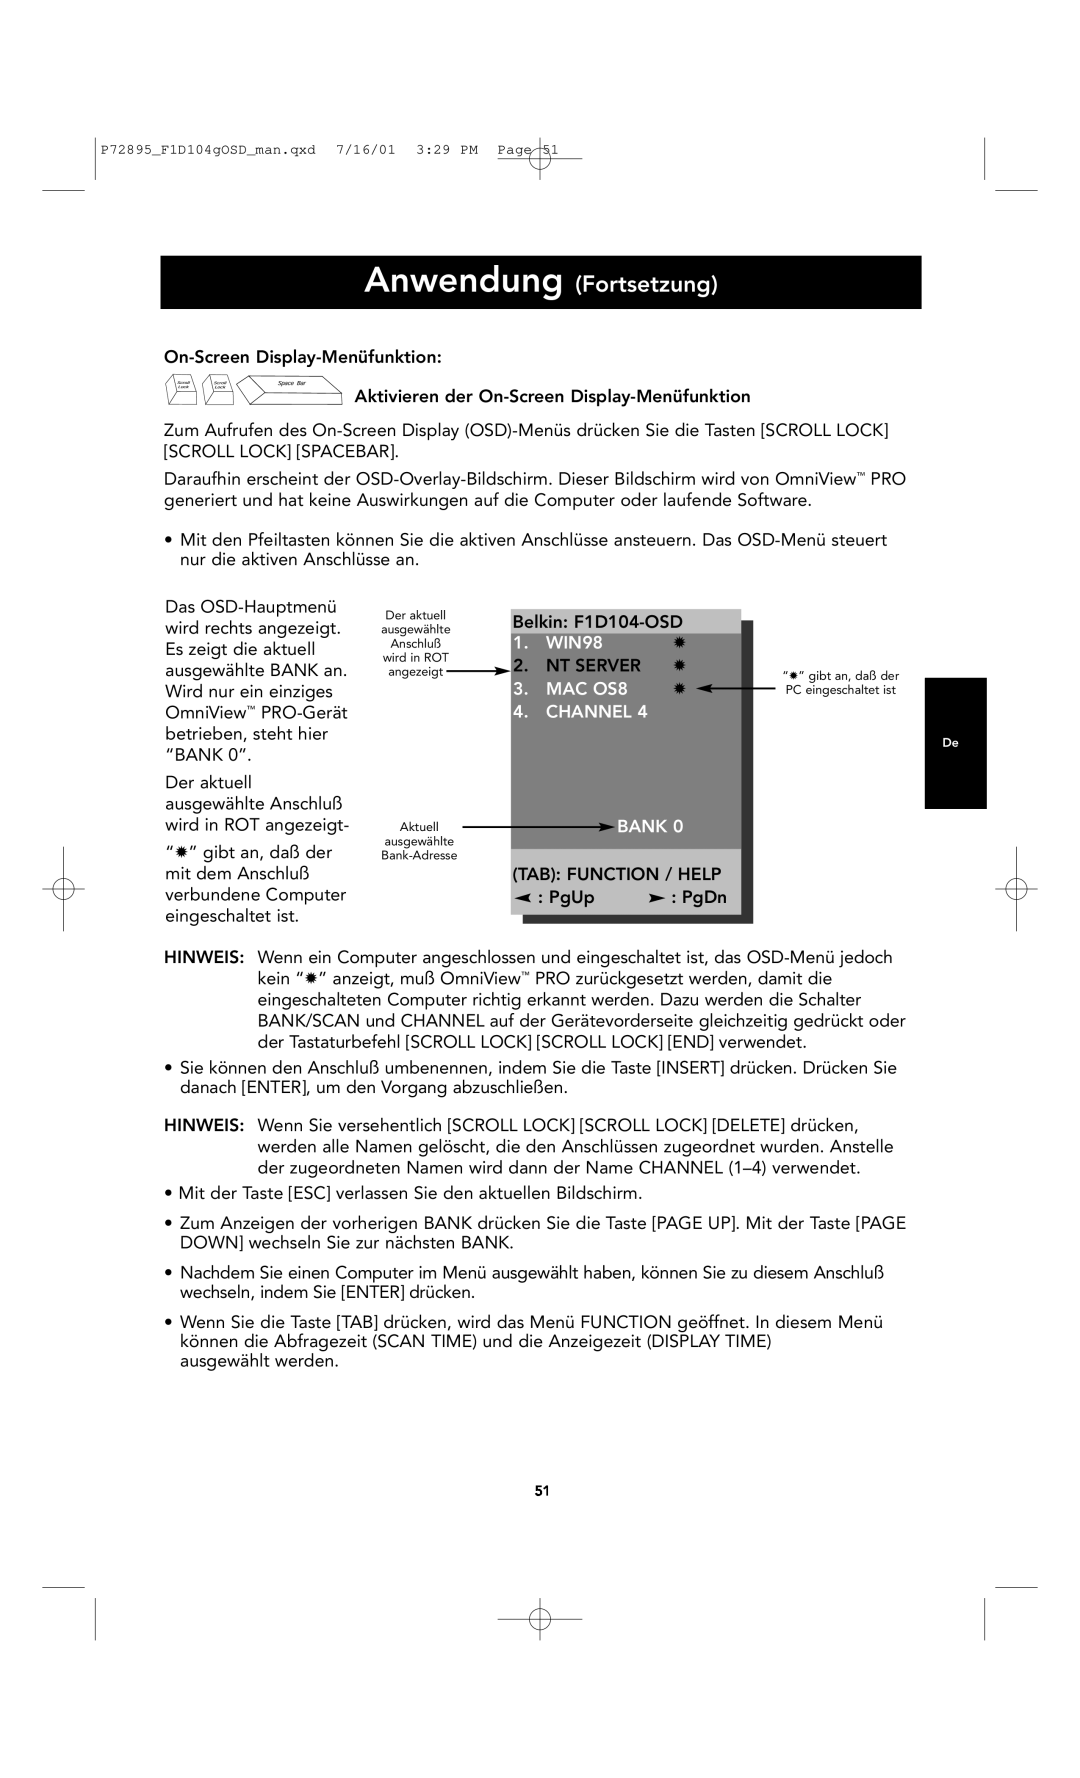 Belkin F1D104-OSD user manual Anwendung Fortsetzung, WIN98, MAC OS8, Channel, Bank 